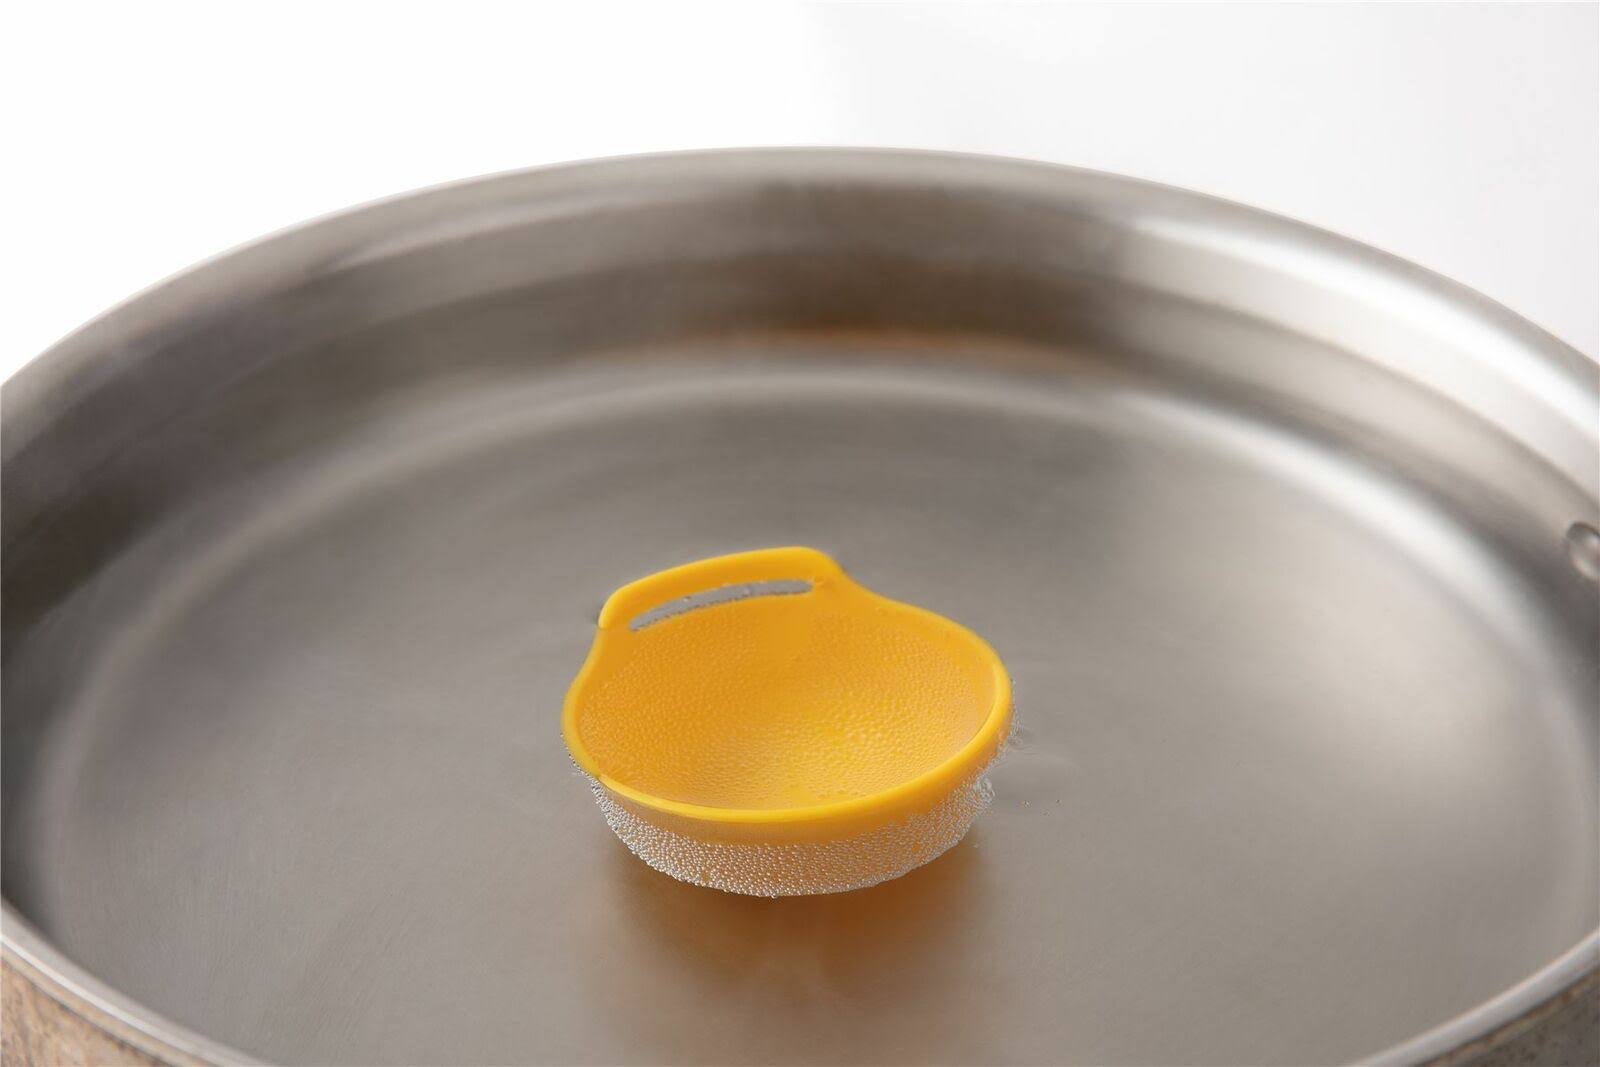 102-837-402 Yellow Chefn 102-837-402 Yolkster Egg Separator 